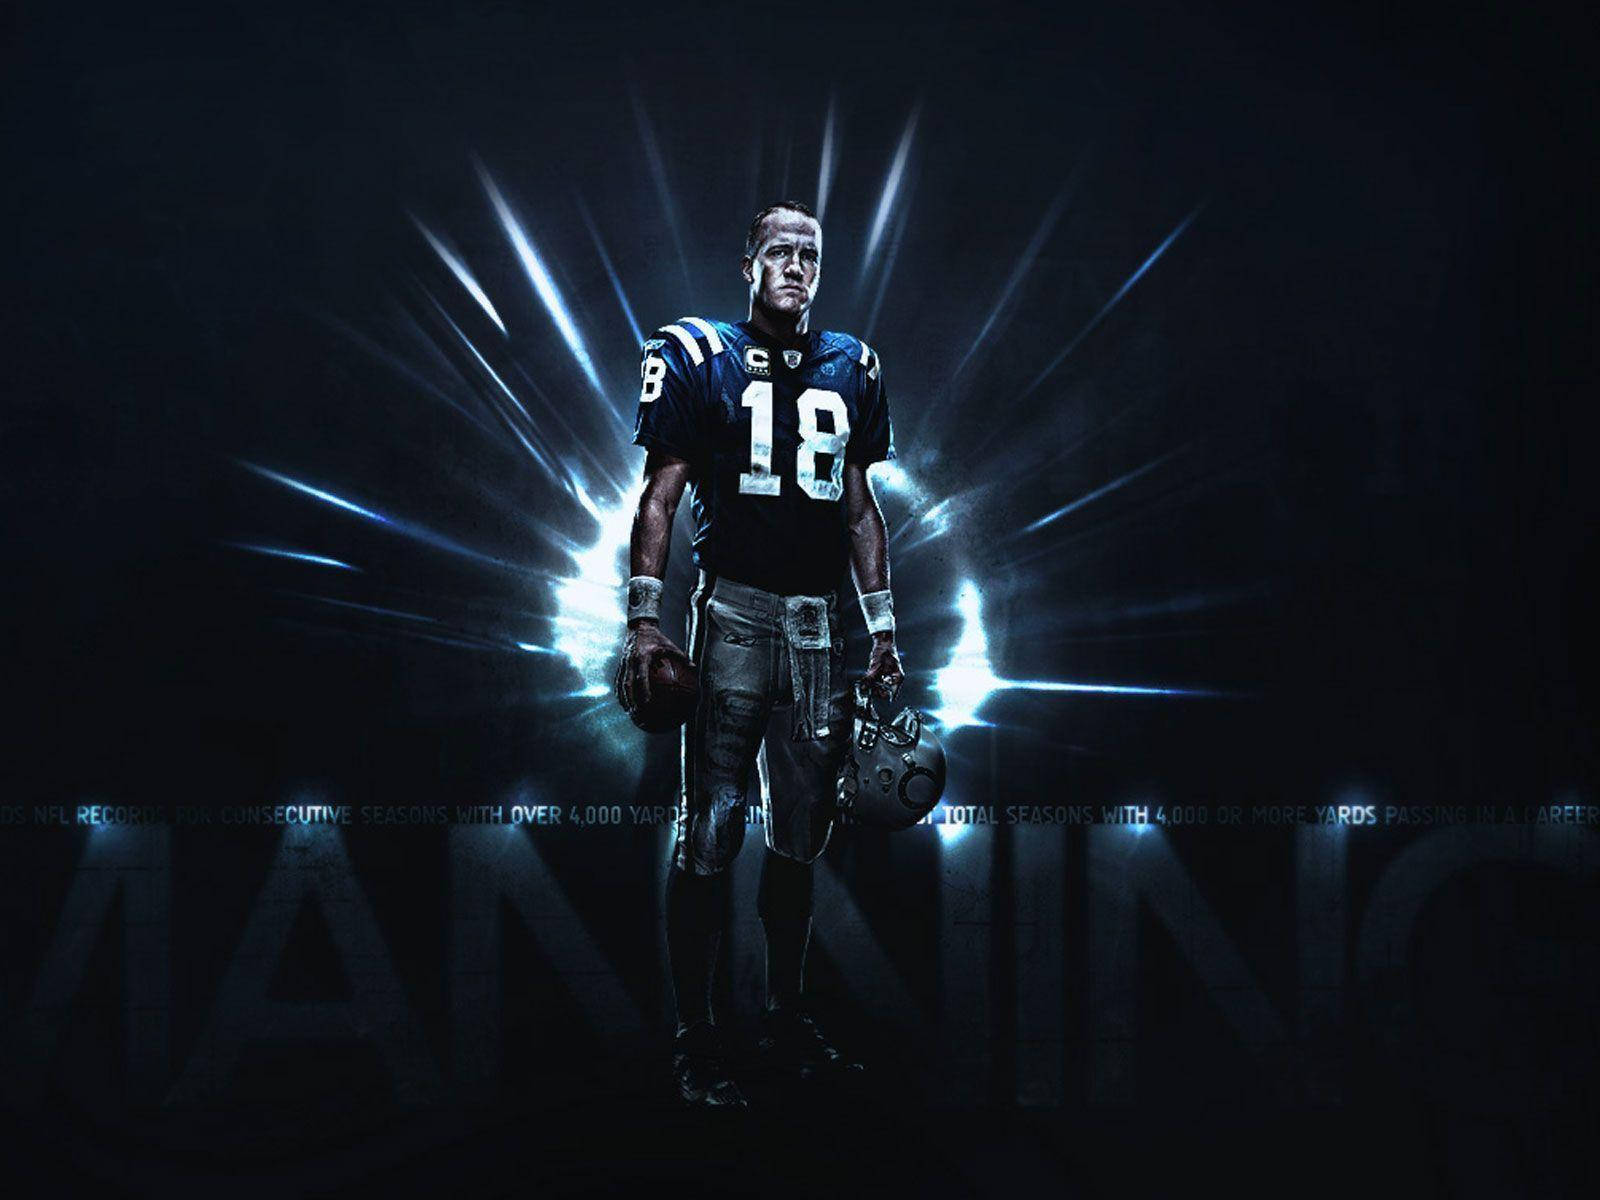 Jogadorde Futebol Americano Da Nfl Peyton Manning. Papel de Parede